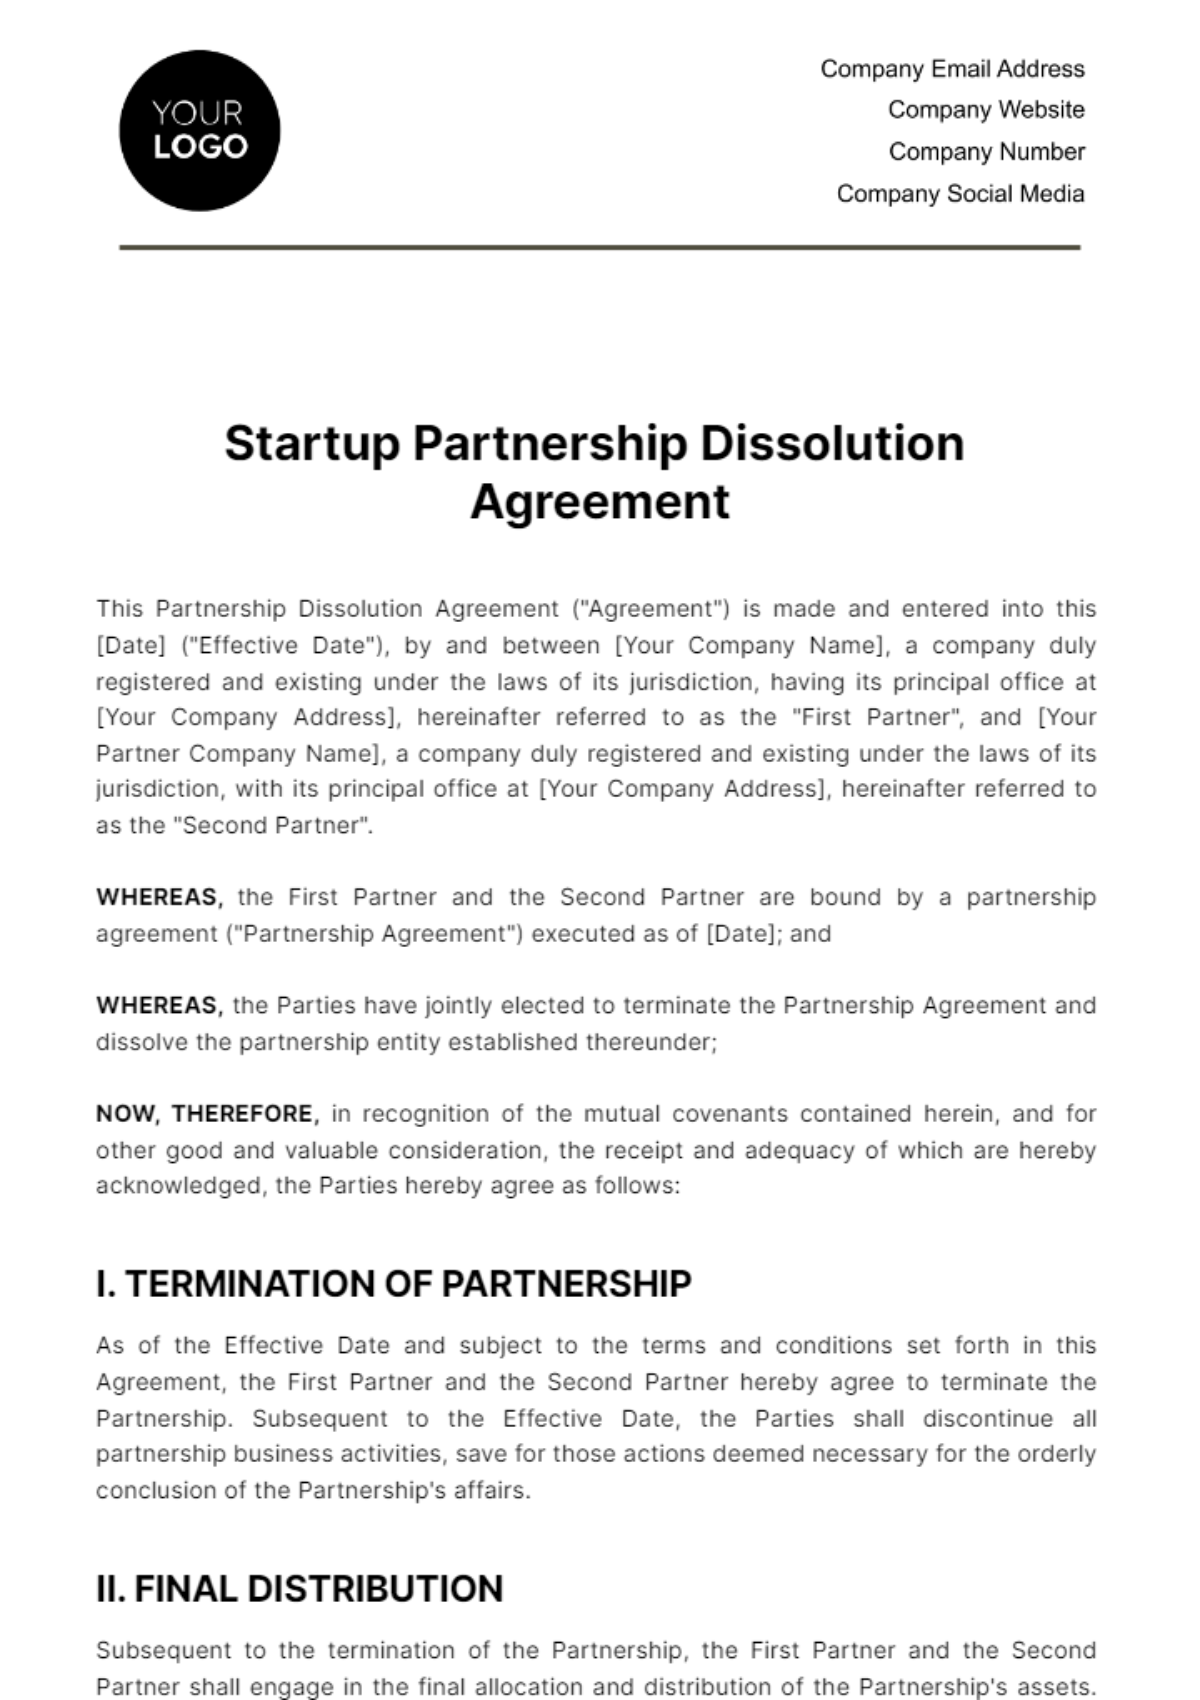 Startup Partnership Dissolution Agreement Template